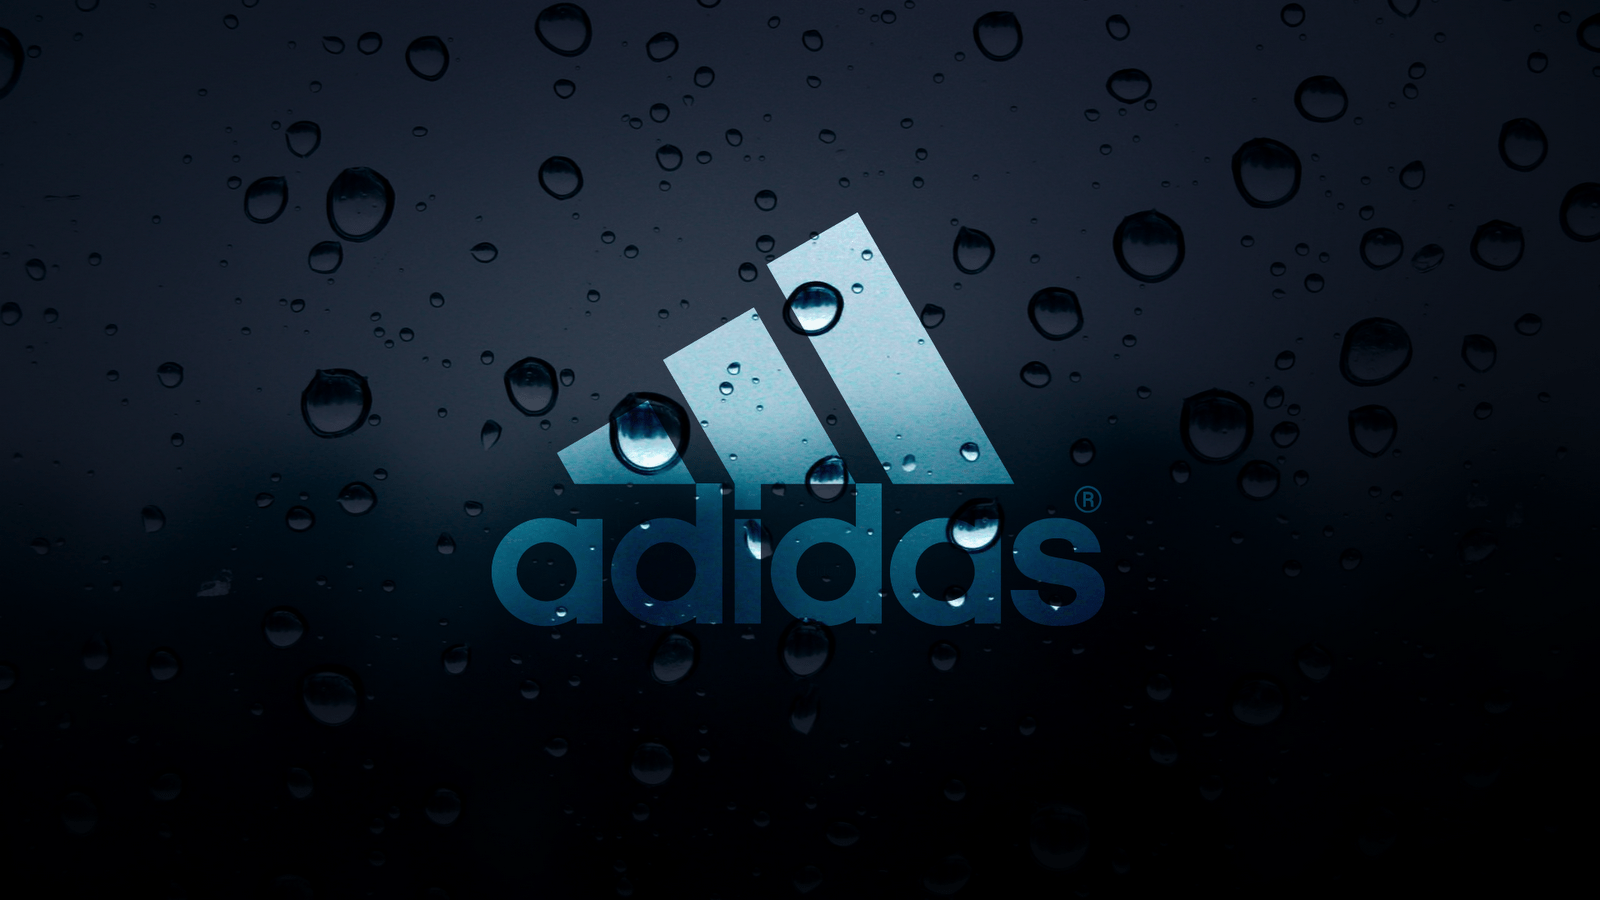 Adidas Logo Wallpapers Top Free Adidas Logo Backgrounds Wallpaperaccess